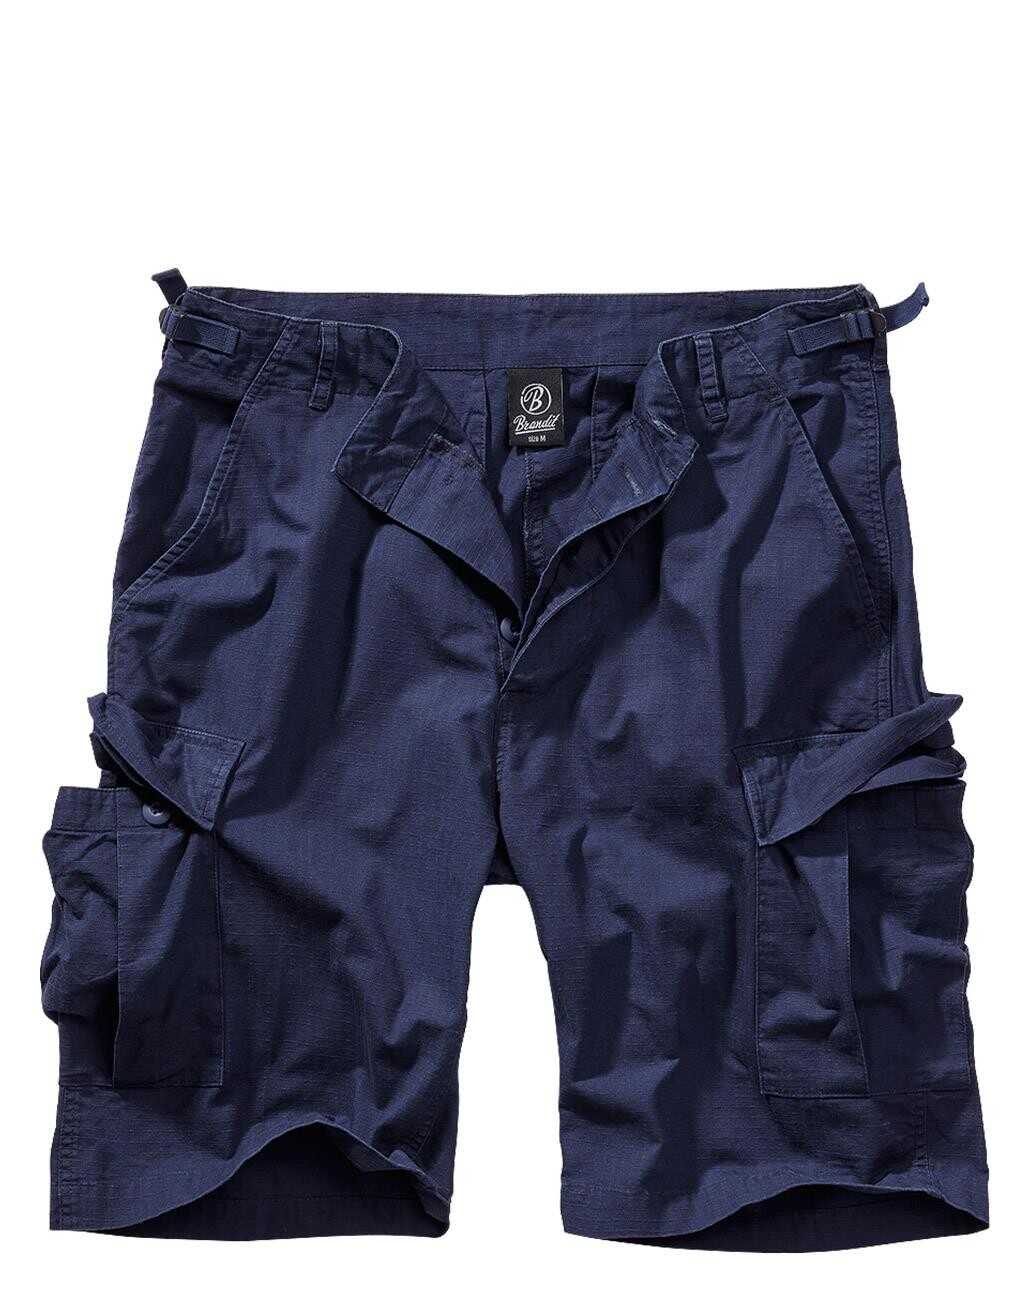 4: Brandit BDU Ripstop Shorts (Navy, M)